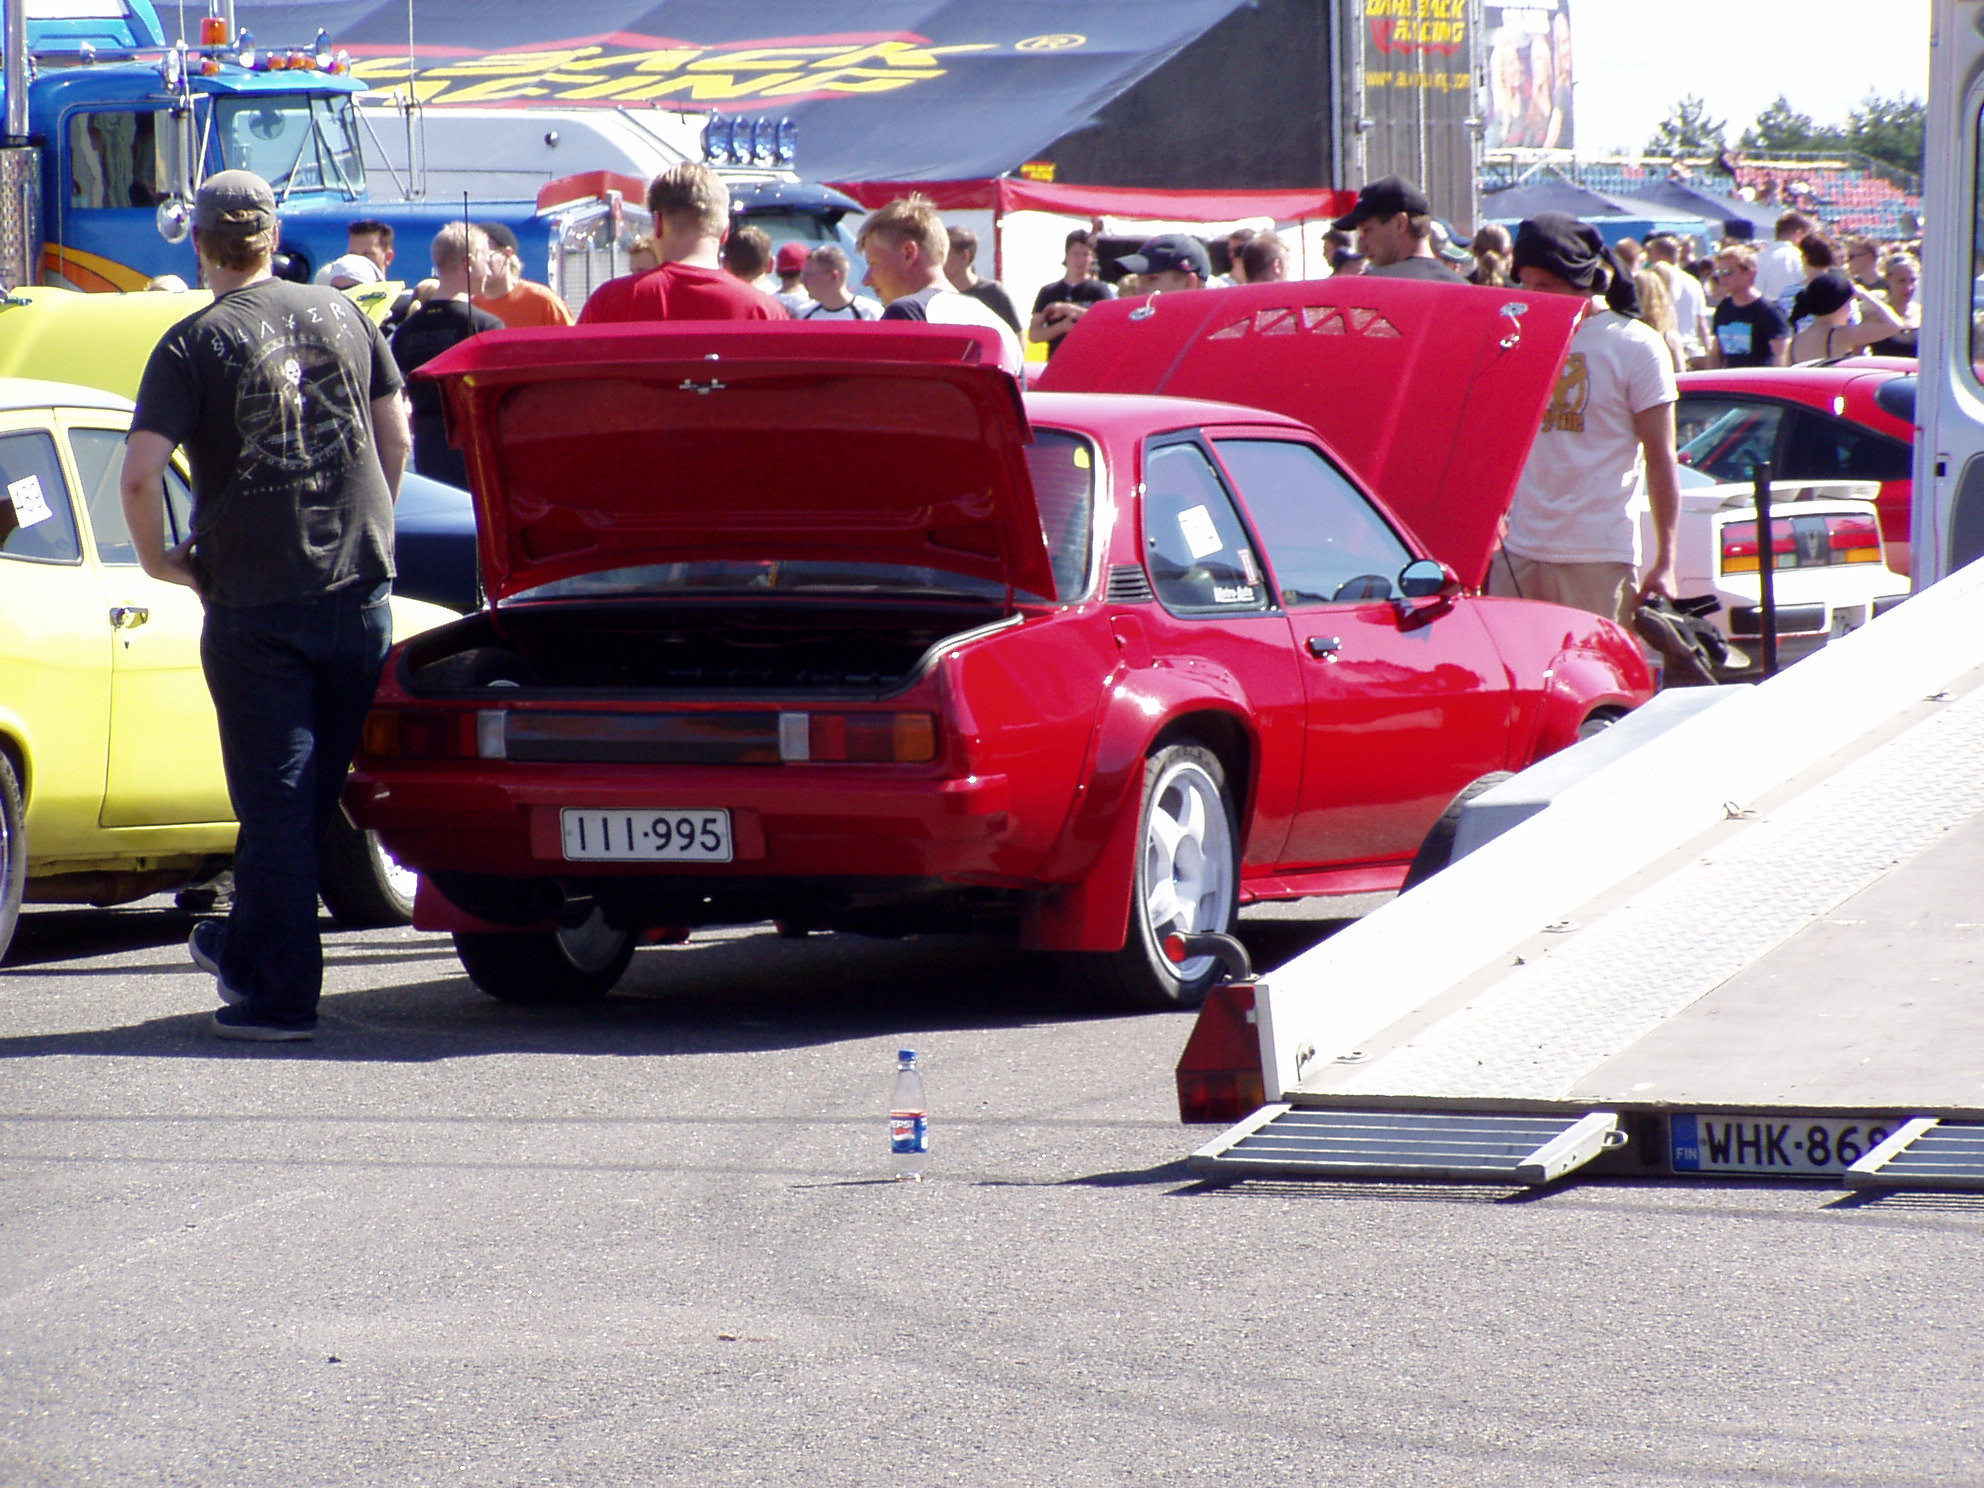 X-treme Drift Challenge #2  31.7.2005, Punainen Opel Ascona